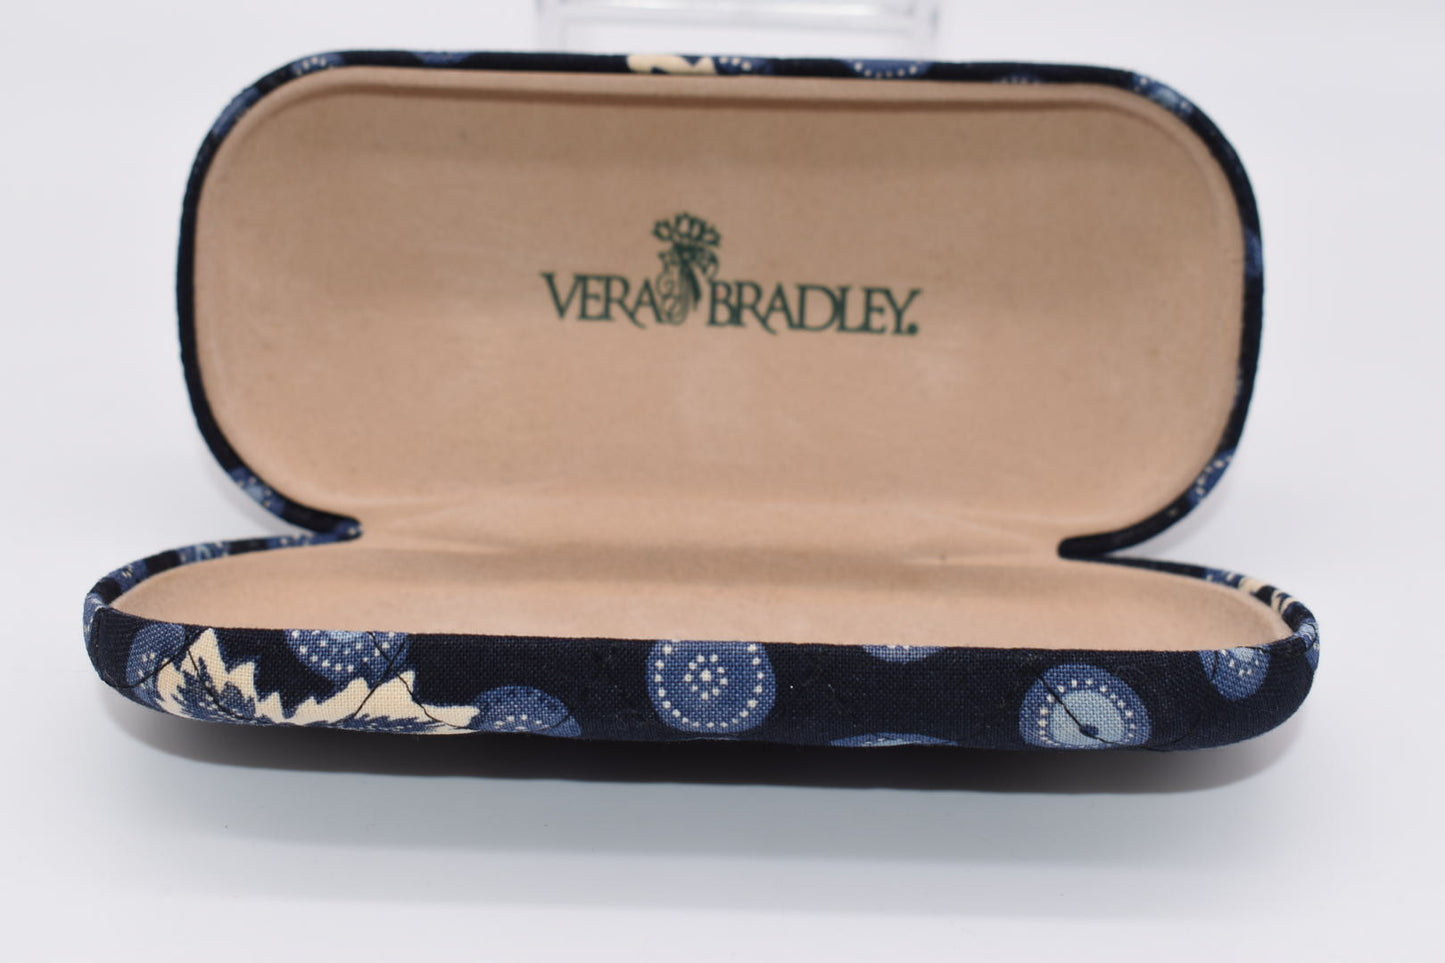 Vera Bradley Hard Eyeglass Case in "Classic Navy -1998" Pattern